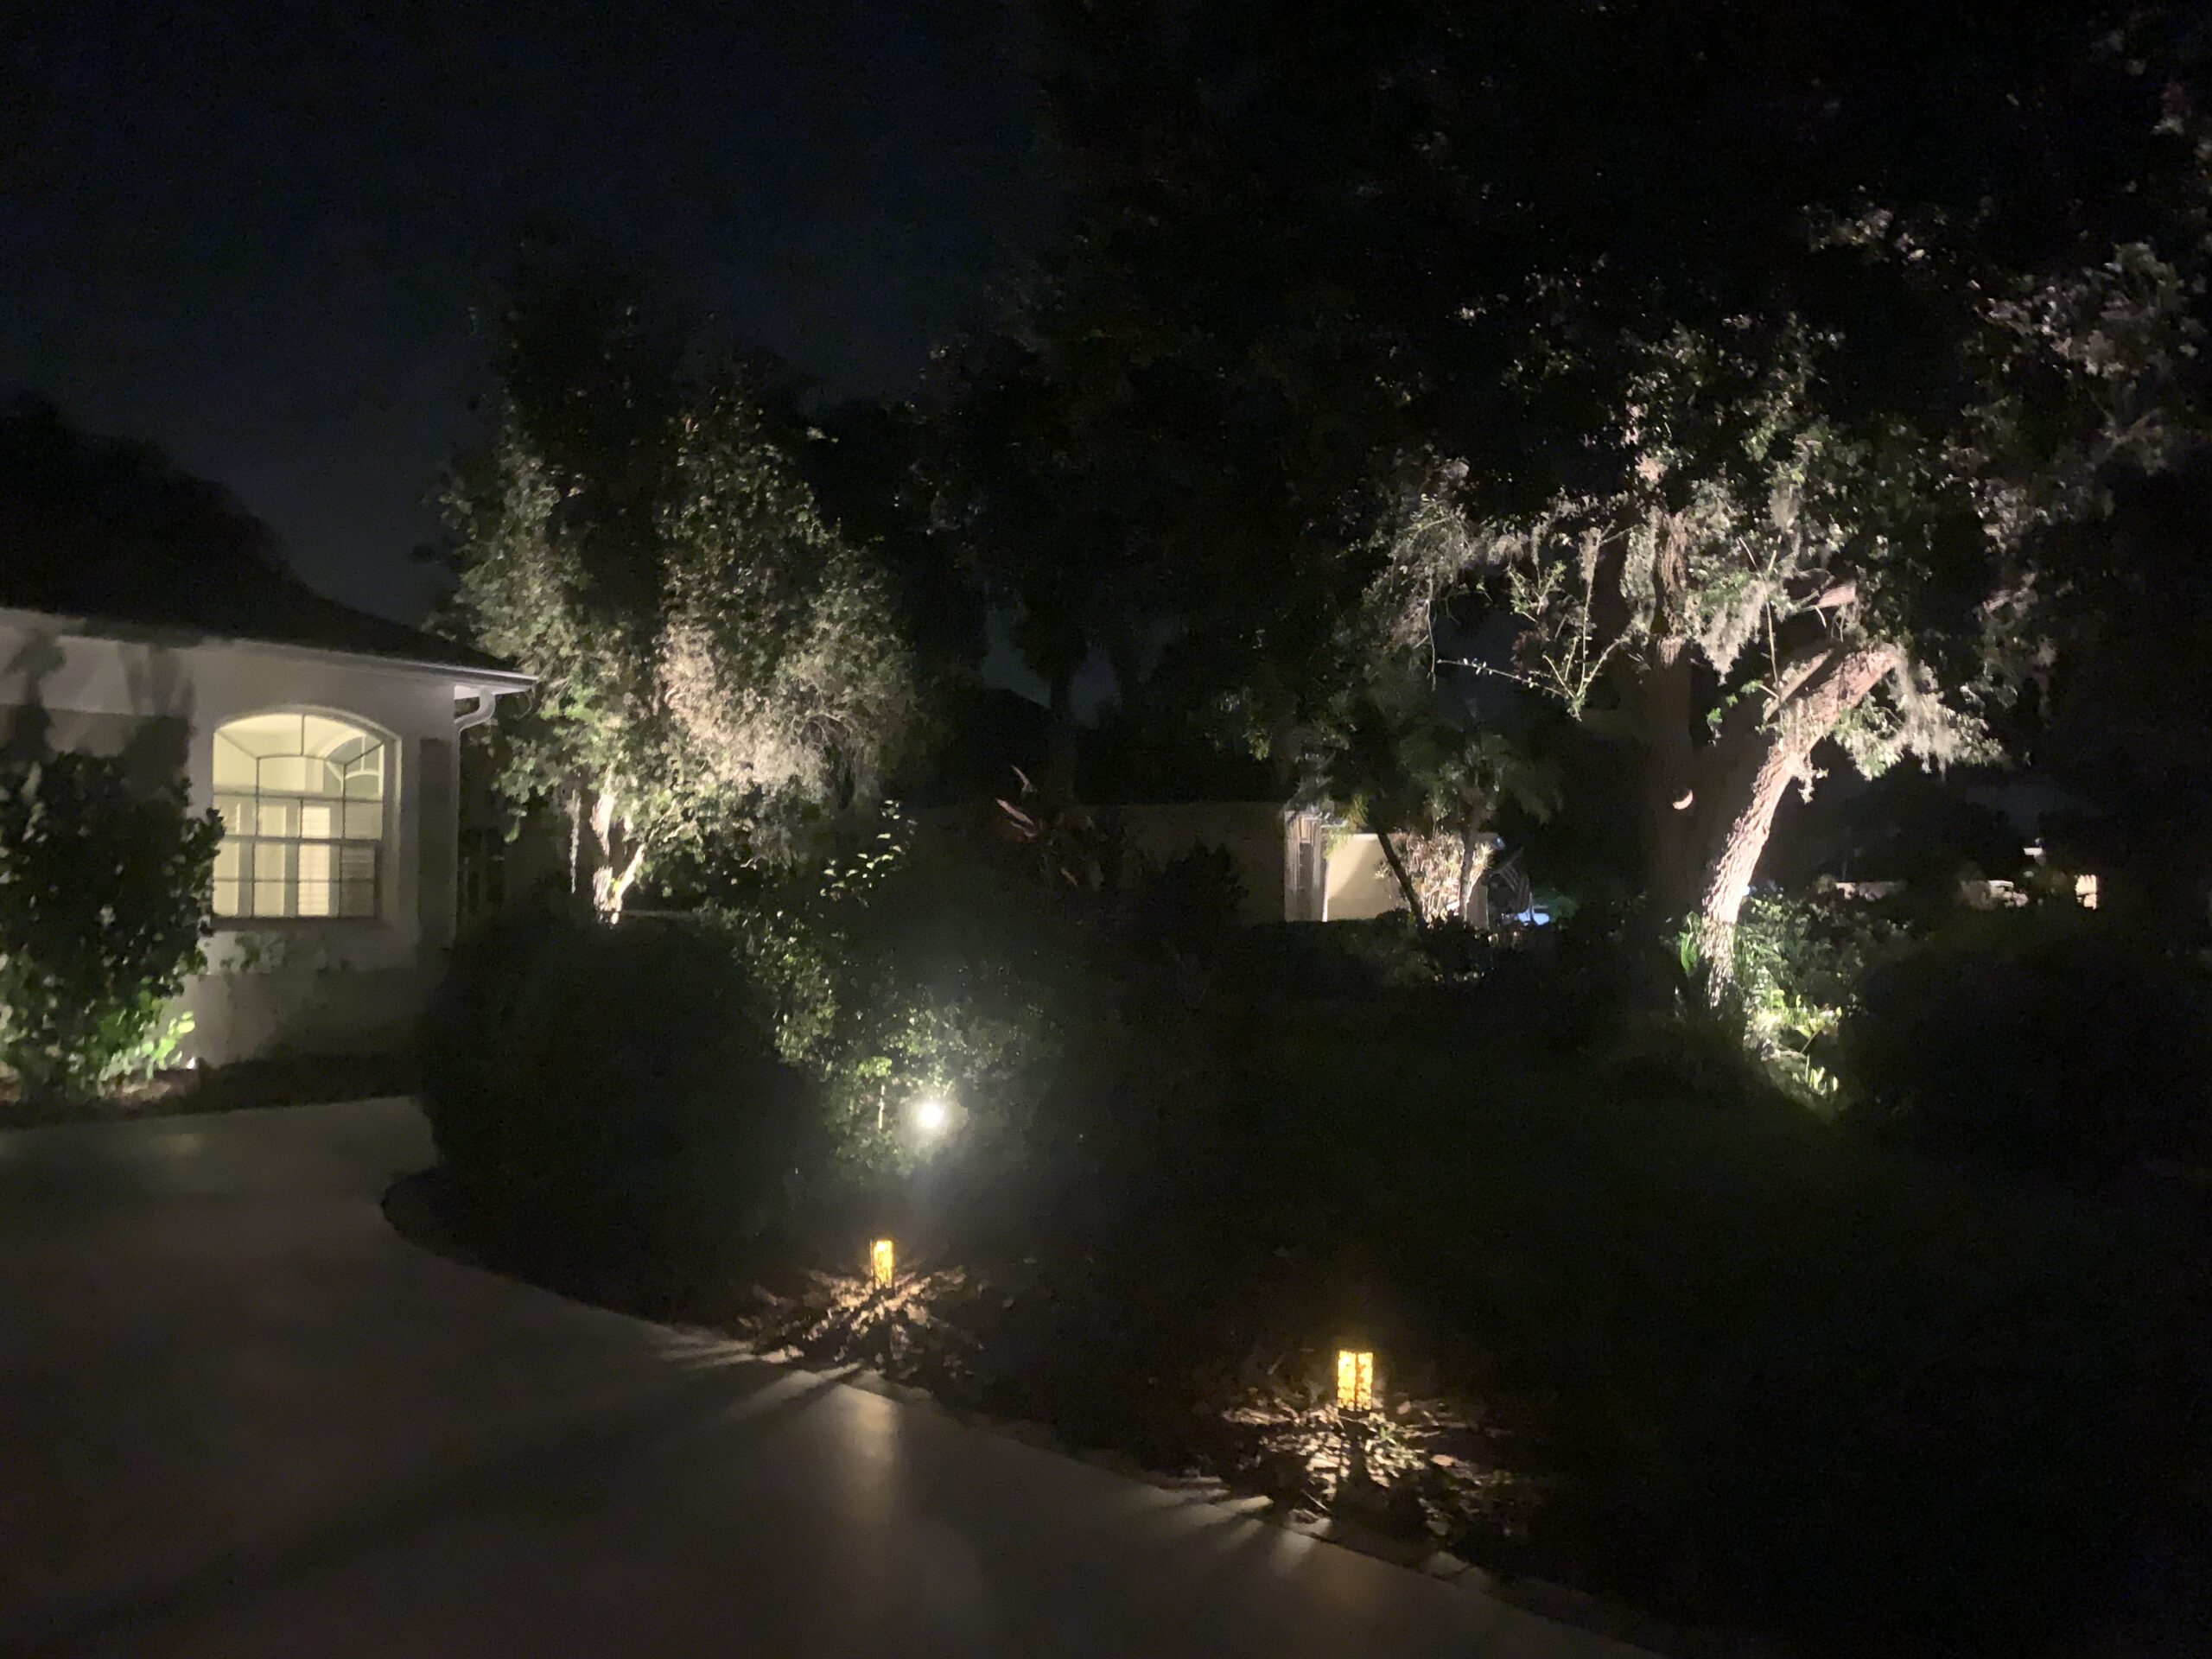 Exterior Accent Tree Lighting